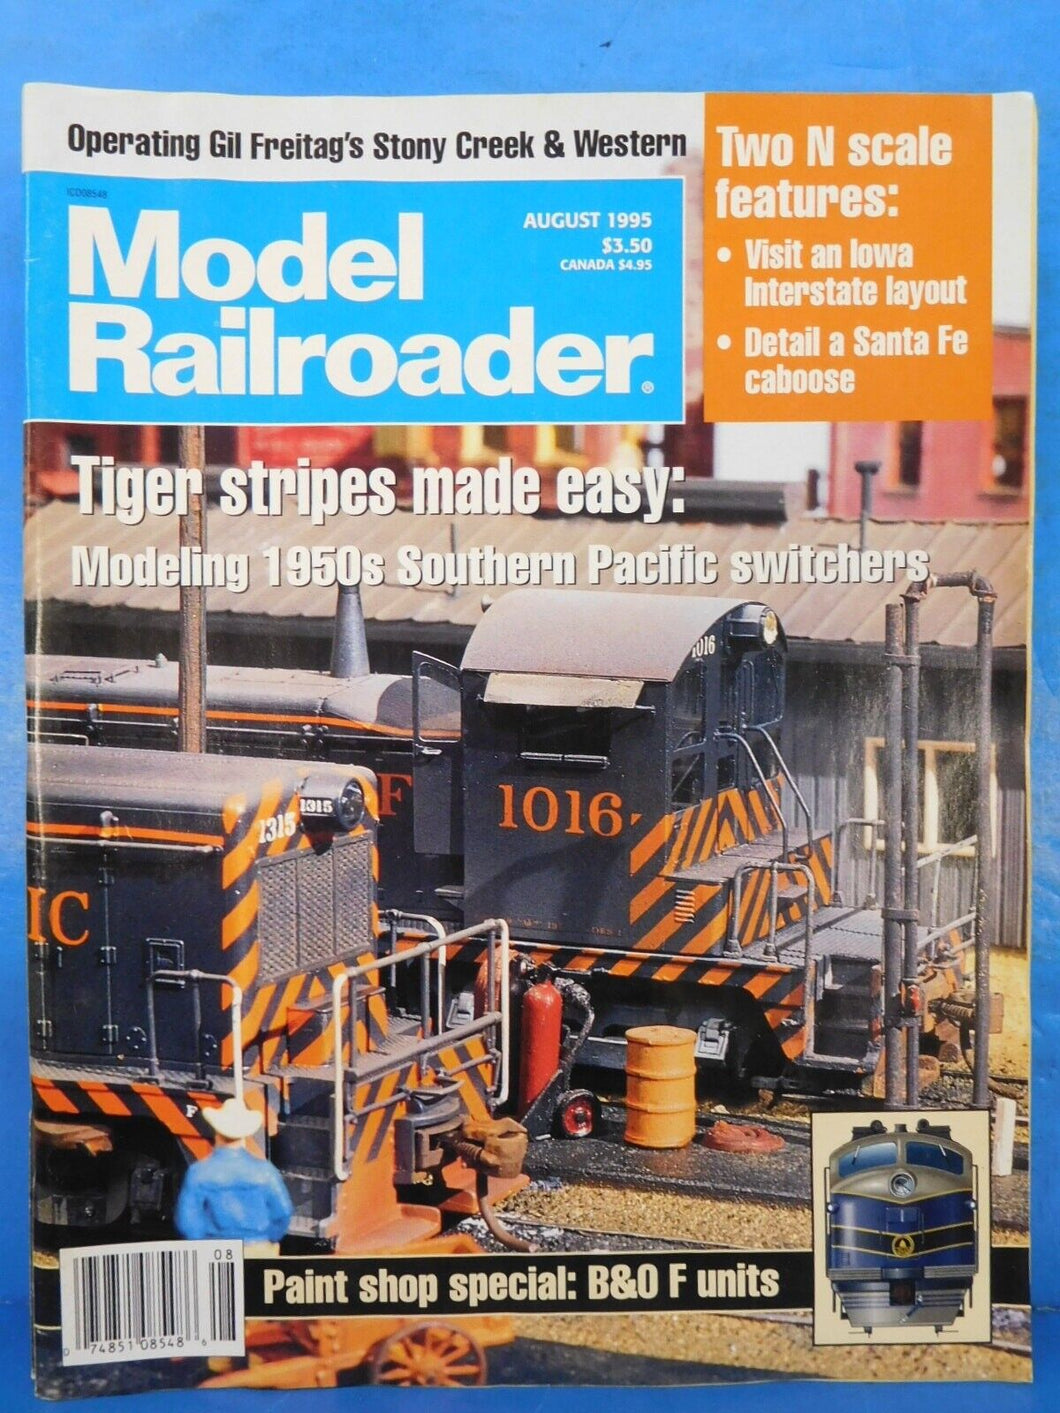 Model Railroader Magazine 1995 August Tiger stripes made easy B&O F units Paint